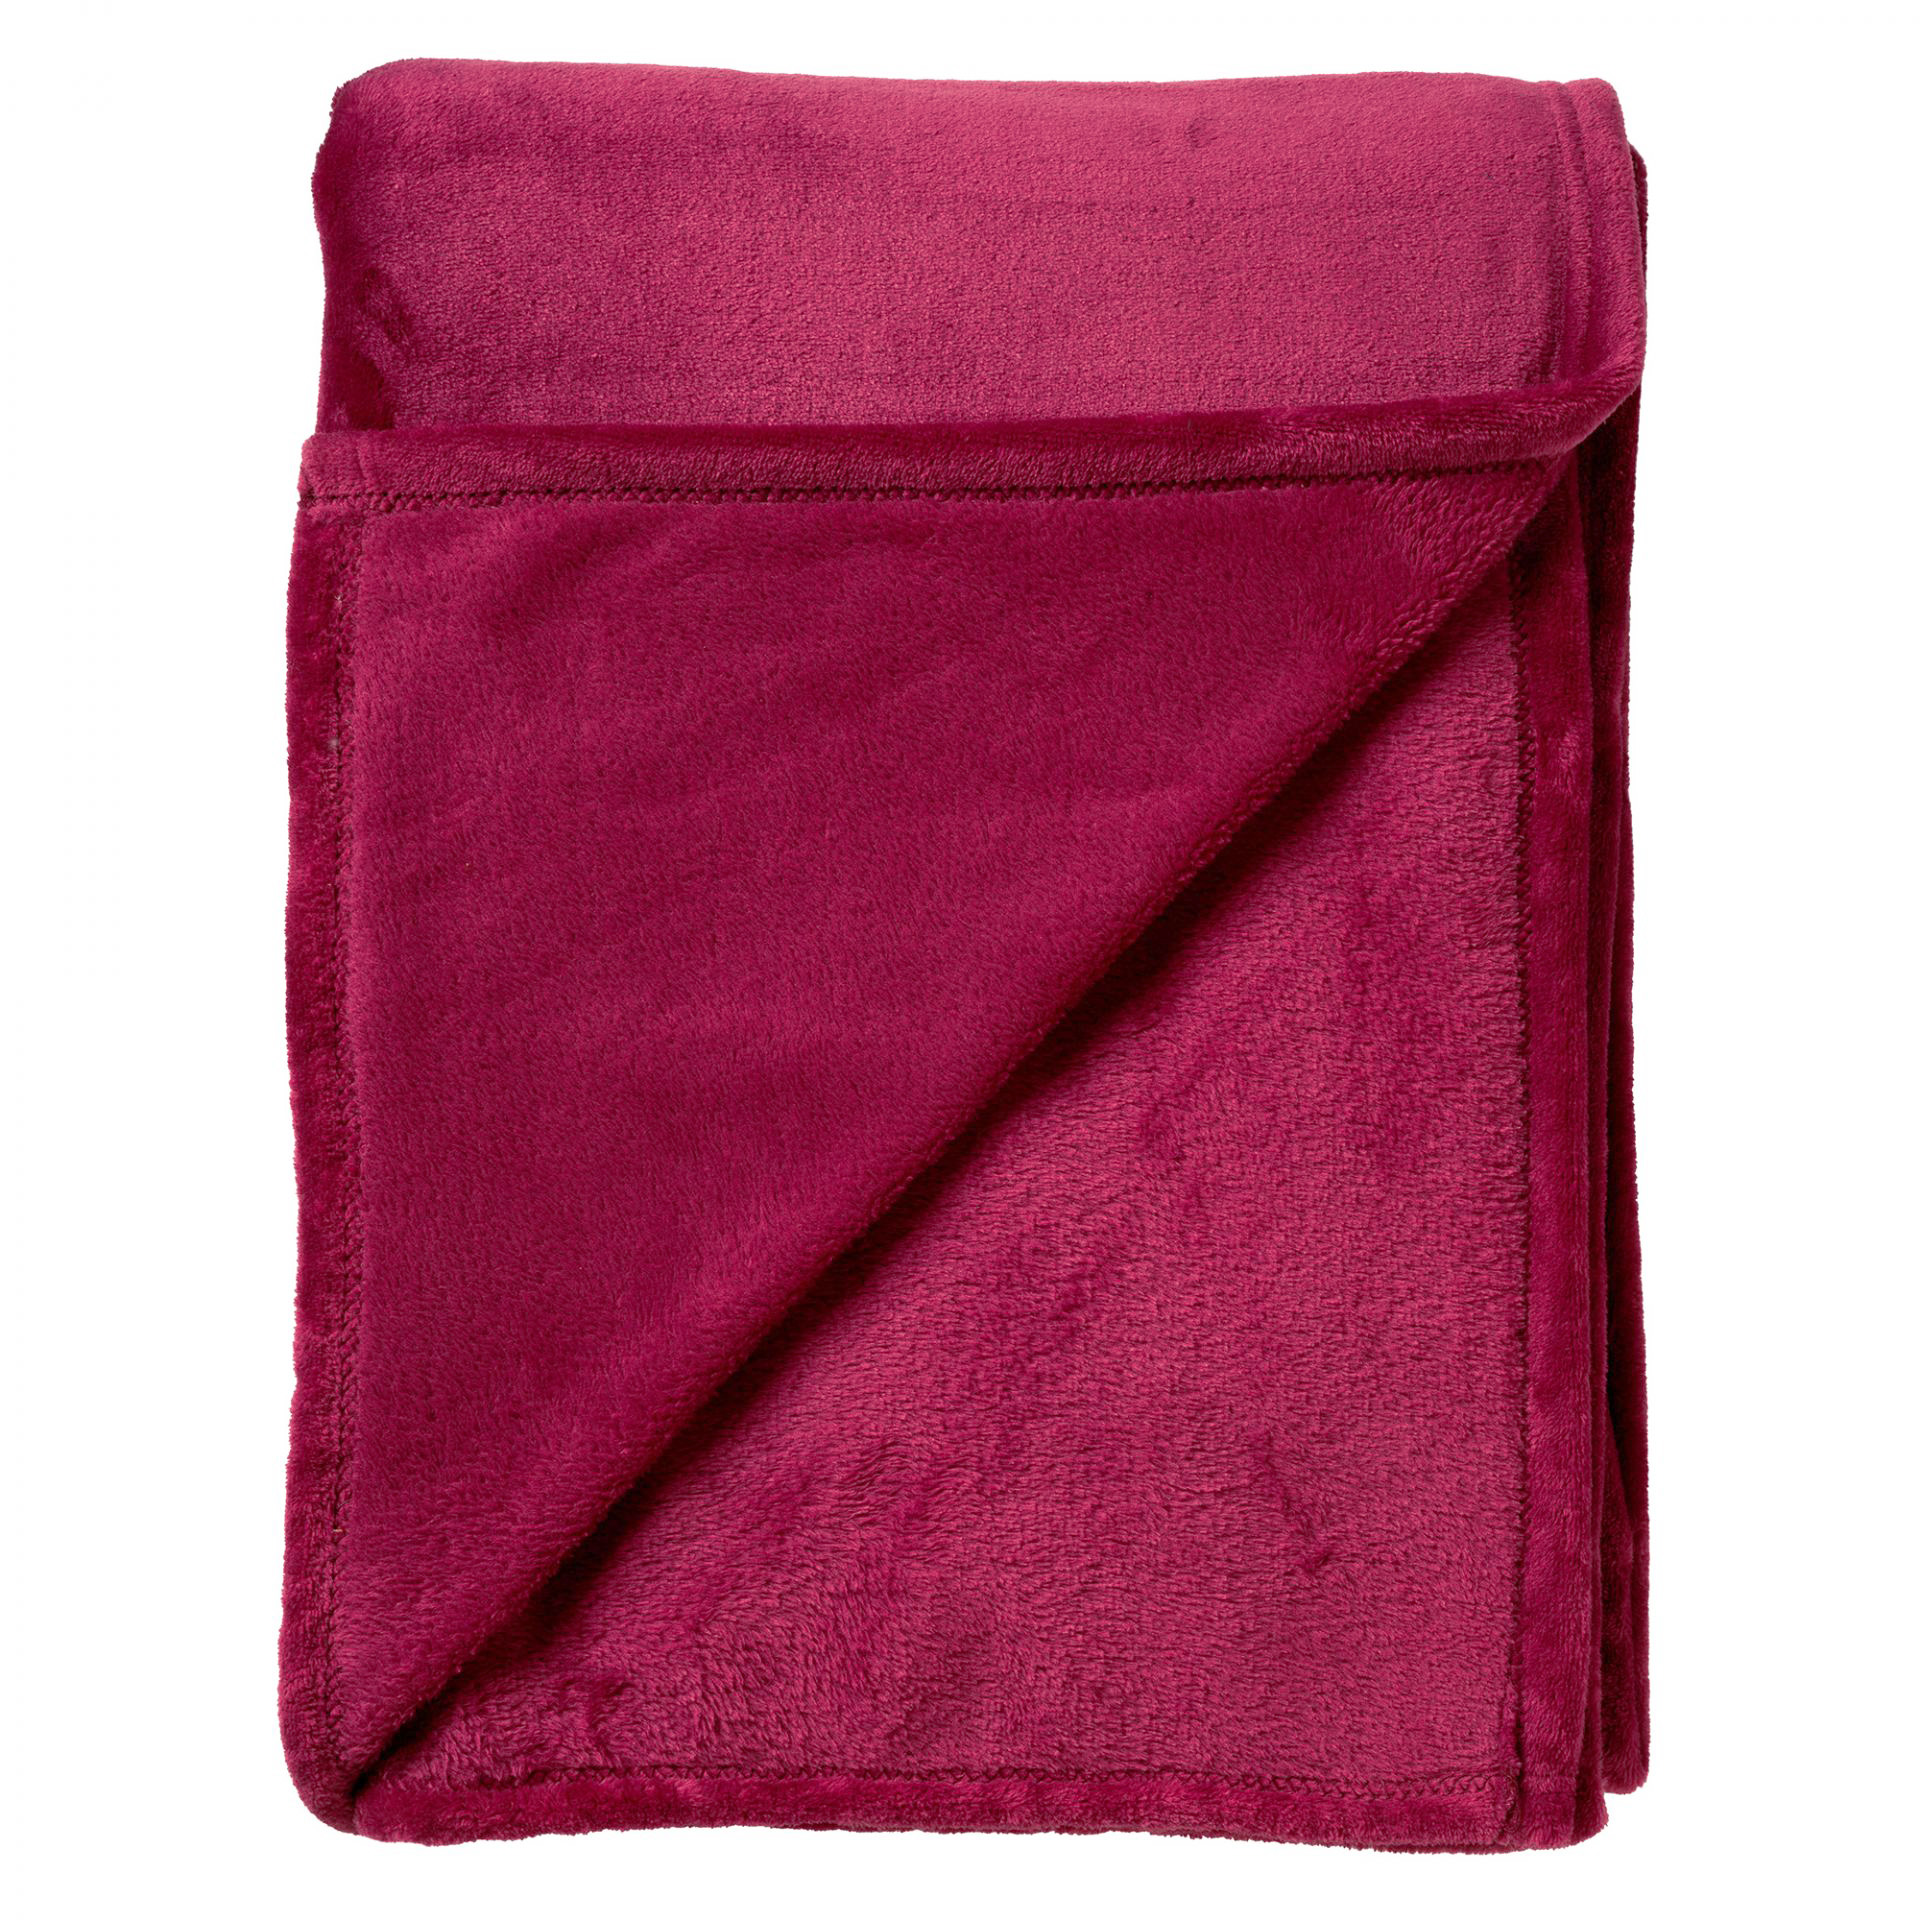 BILLY - Plaid flannel fleece - 150x200 cm - Red Plum - roze - superzacht